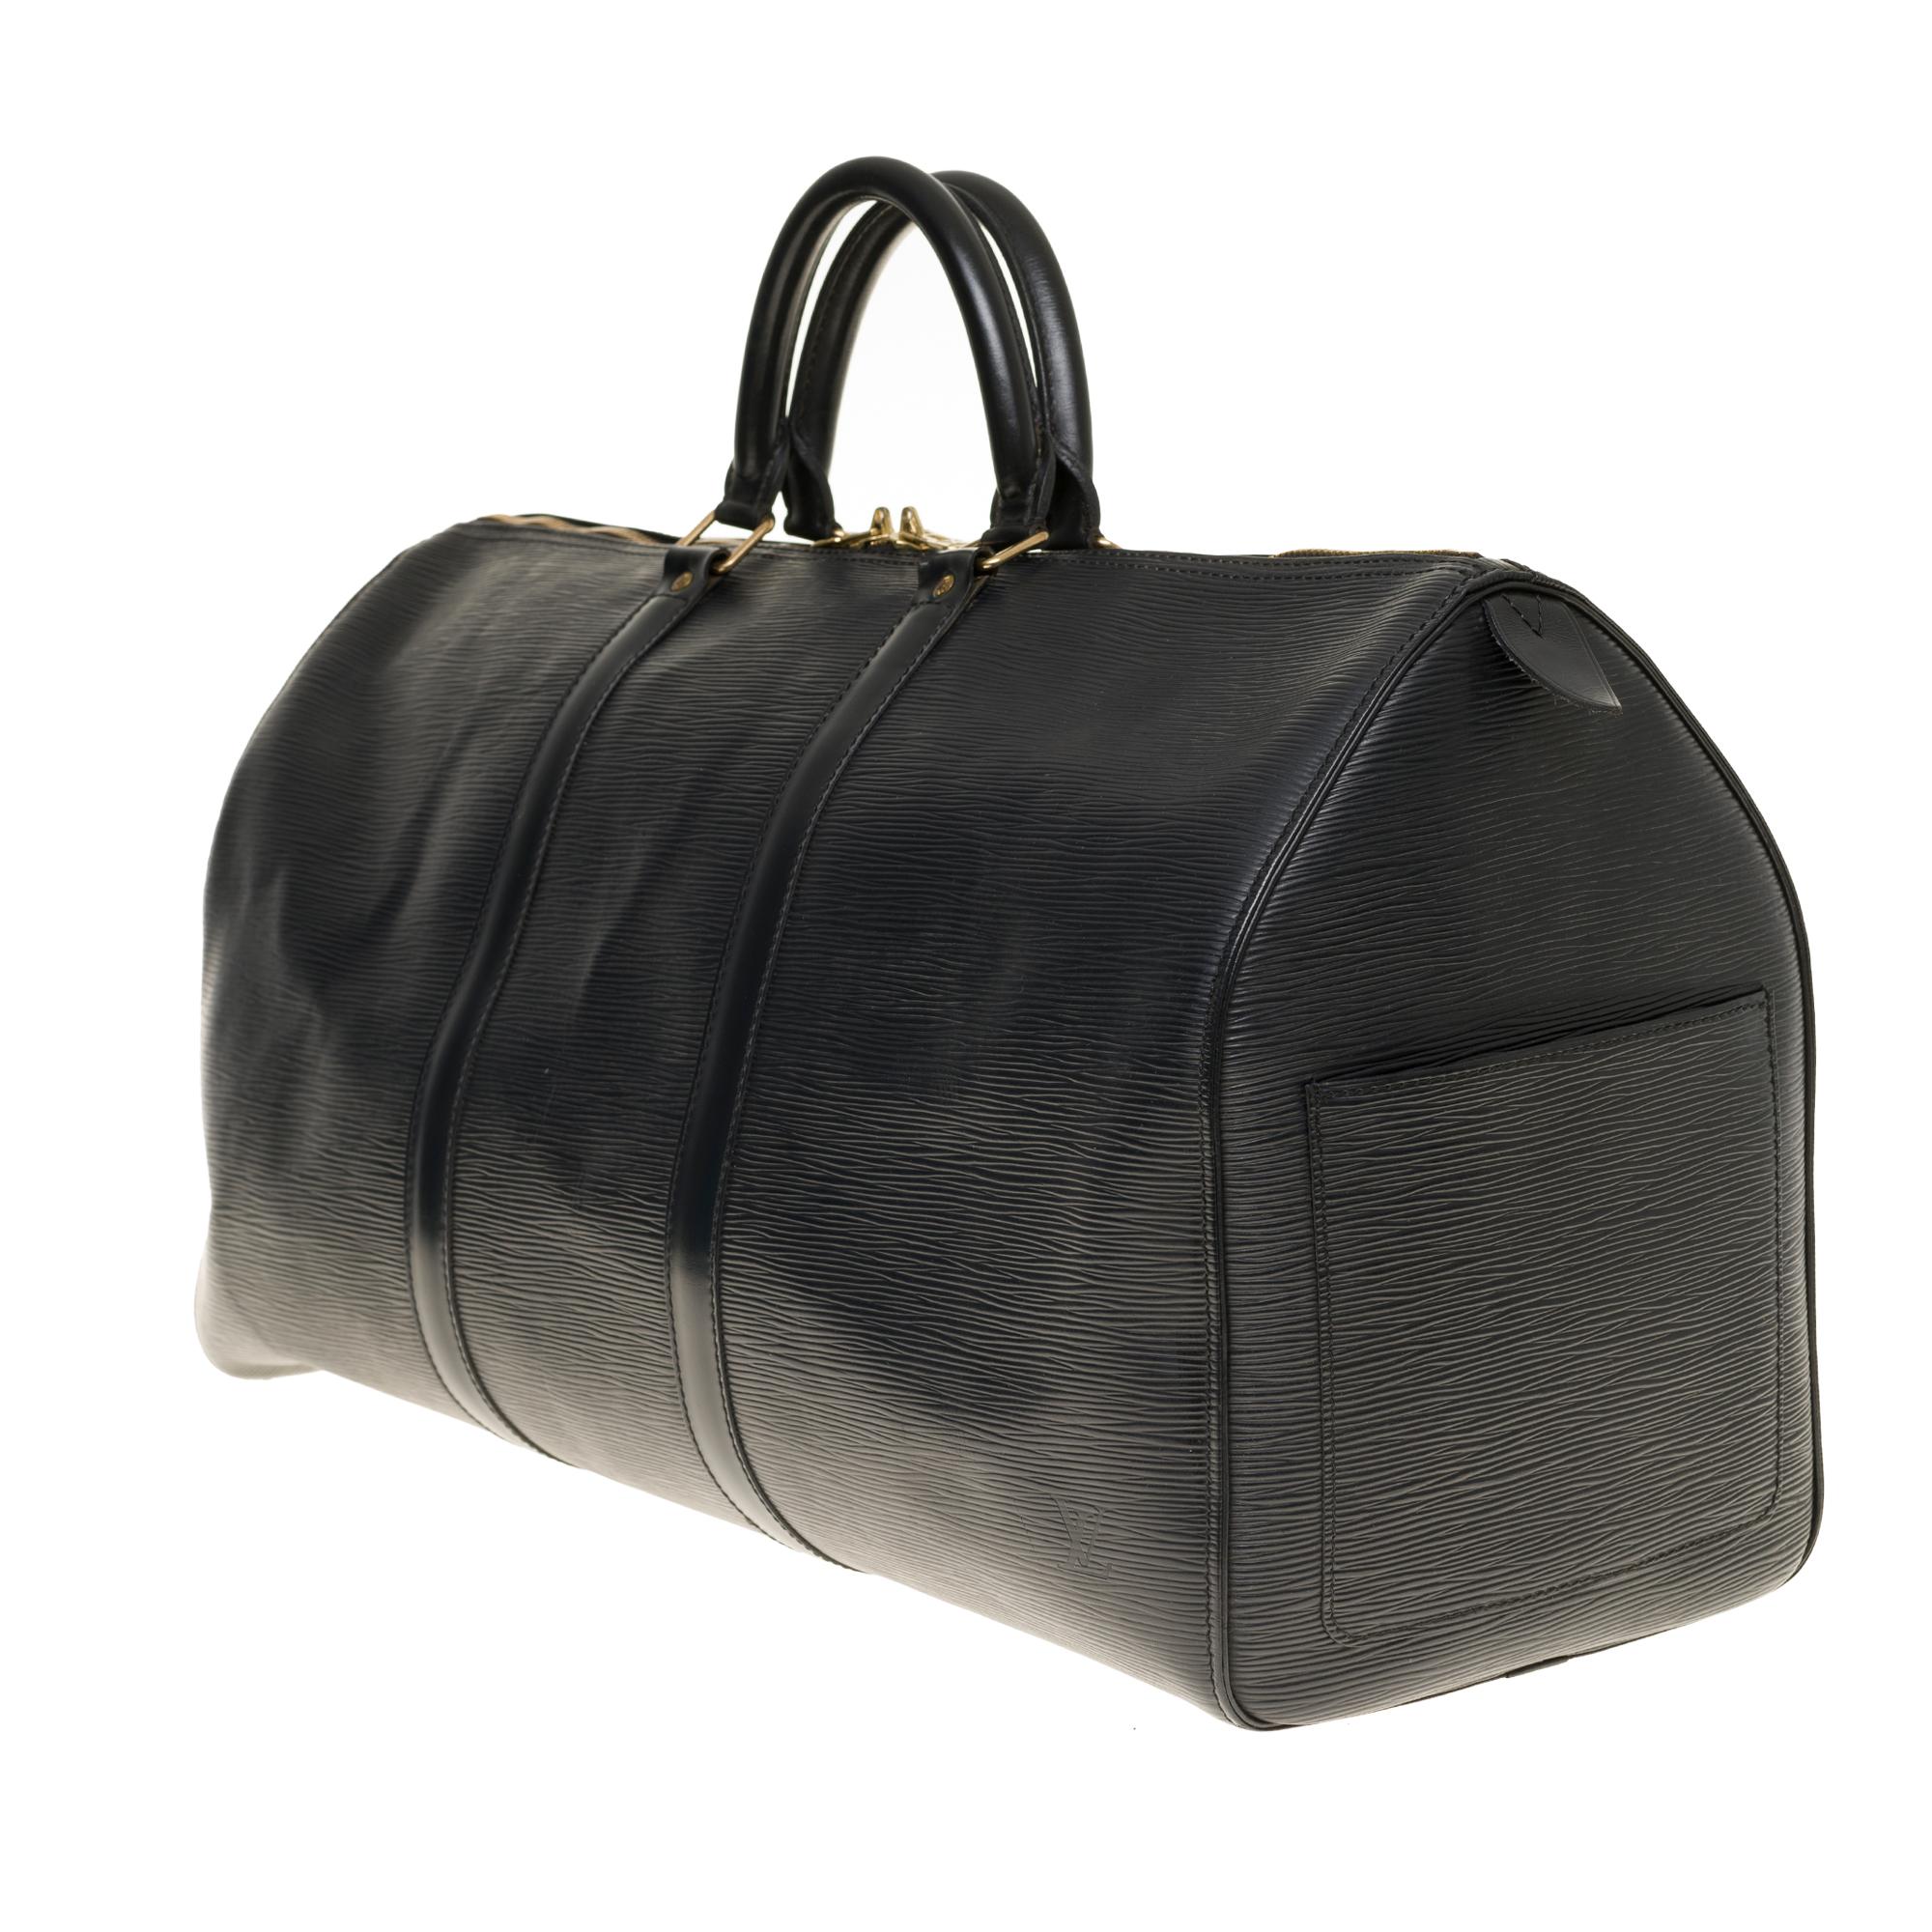 Black Louis Vuitton Keepall 50 Travel bag in black épi leather